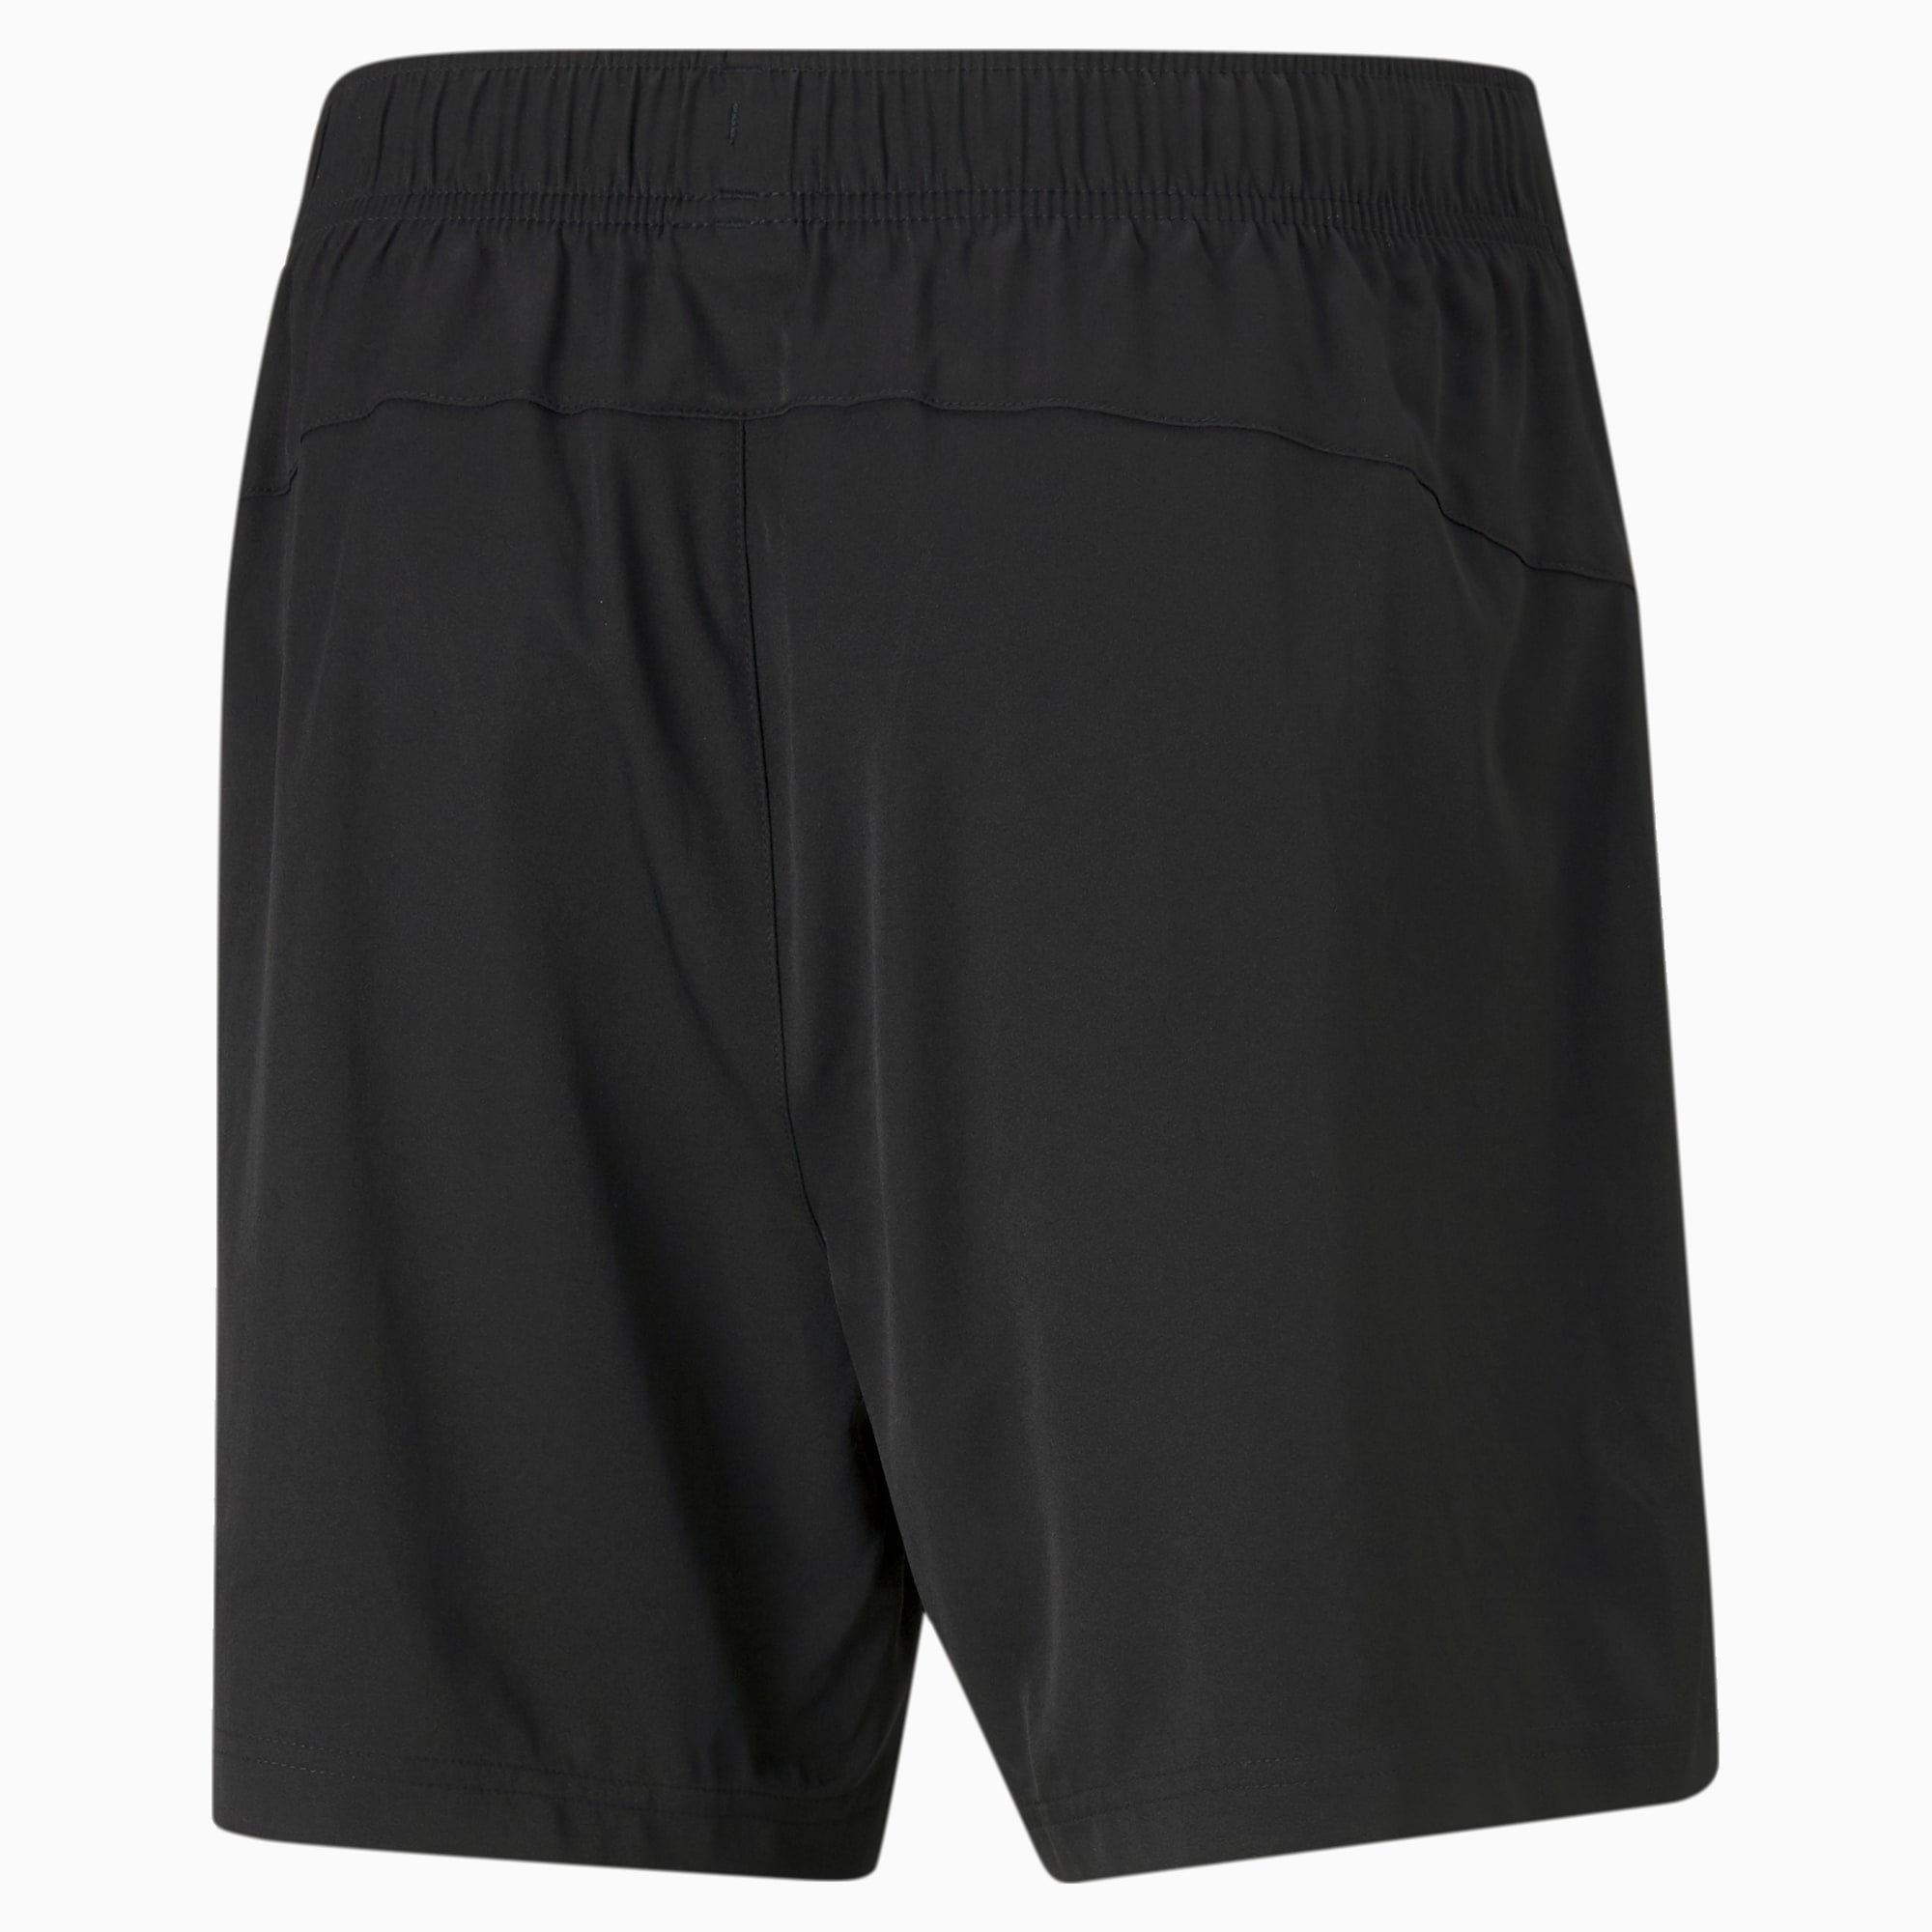 PUMA Active Woven 5 Men's Shorts, Black, Size XXS, Clothing